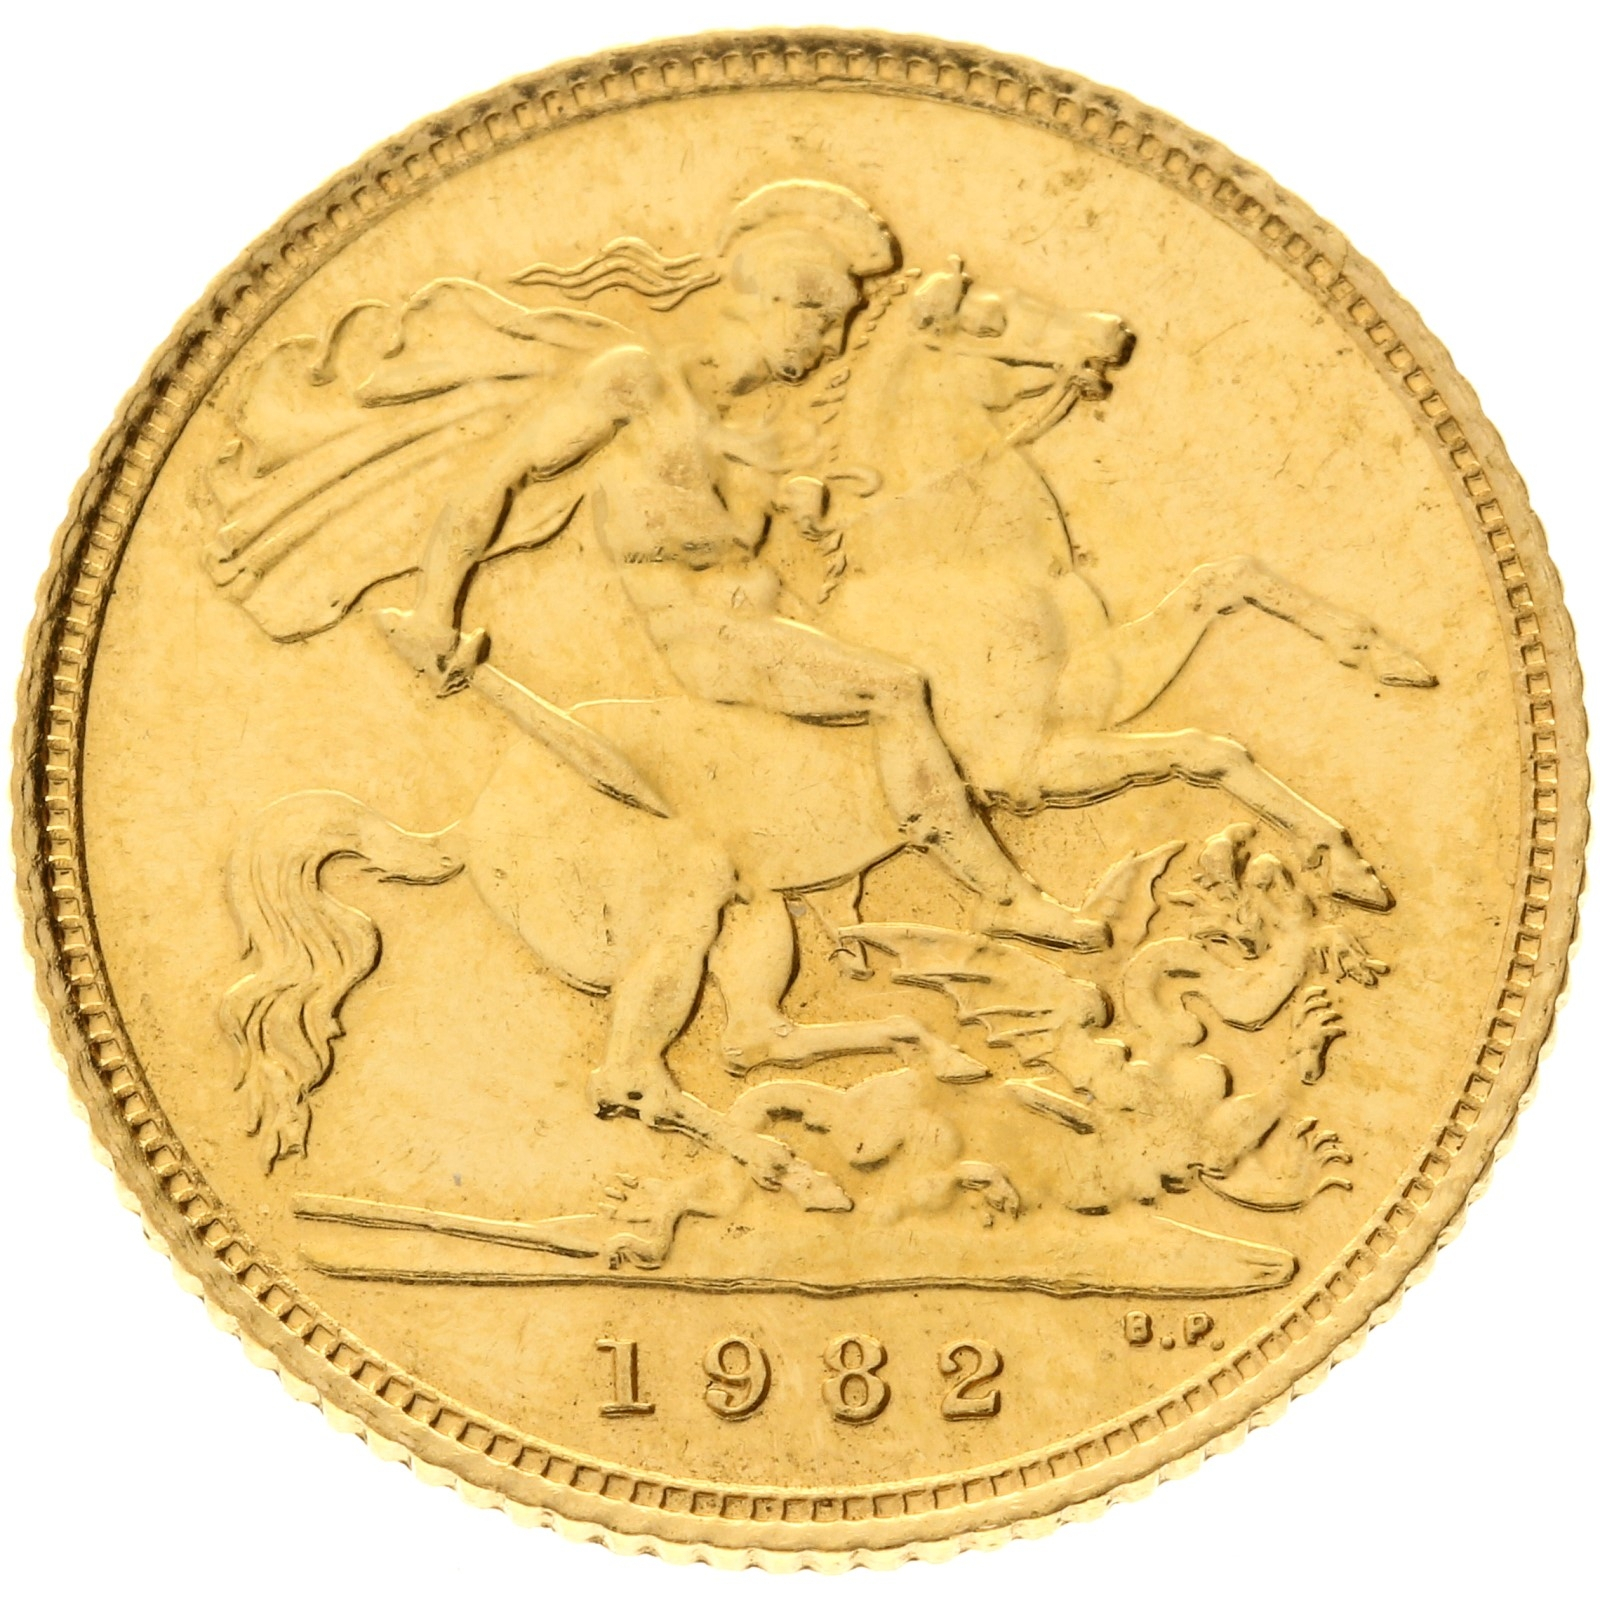 United Kingdom - ½ Sovereign - 1982 - Elizabeth II